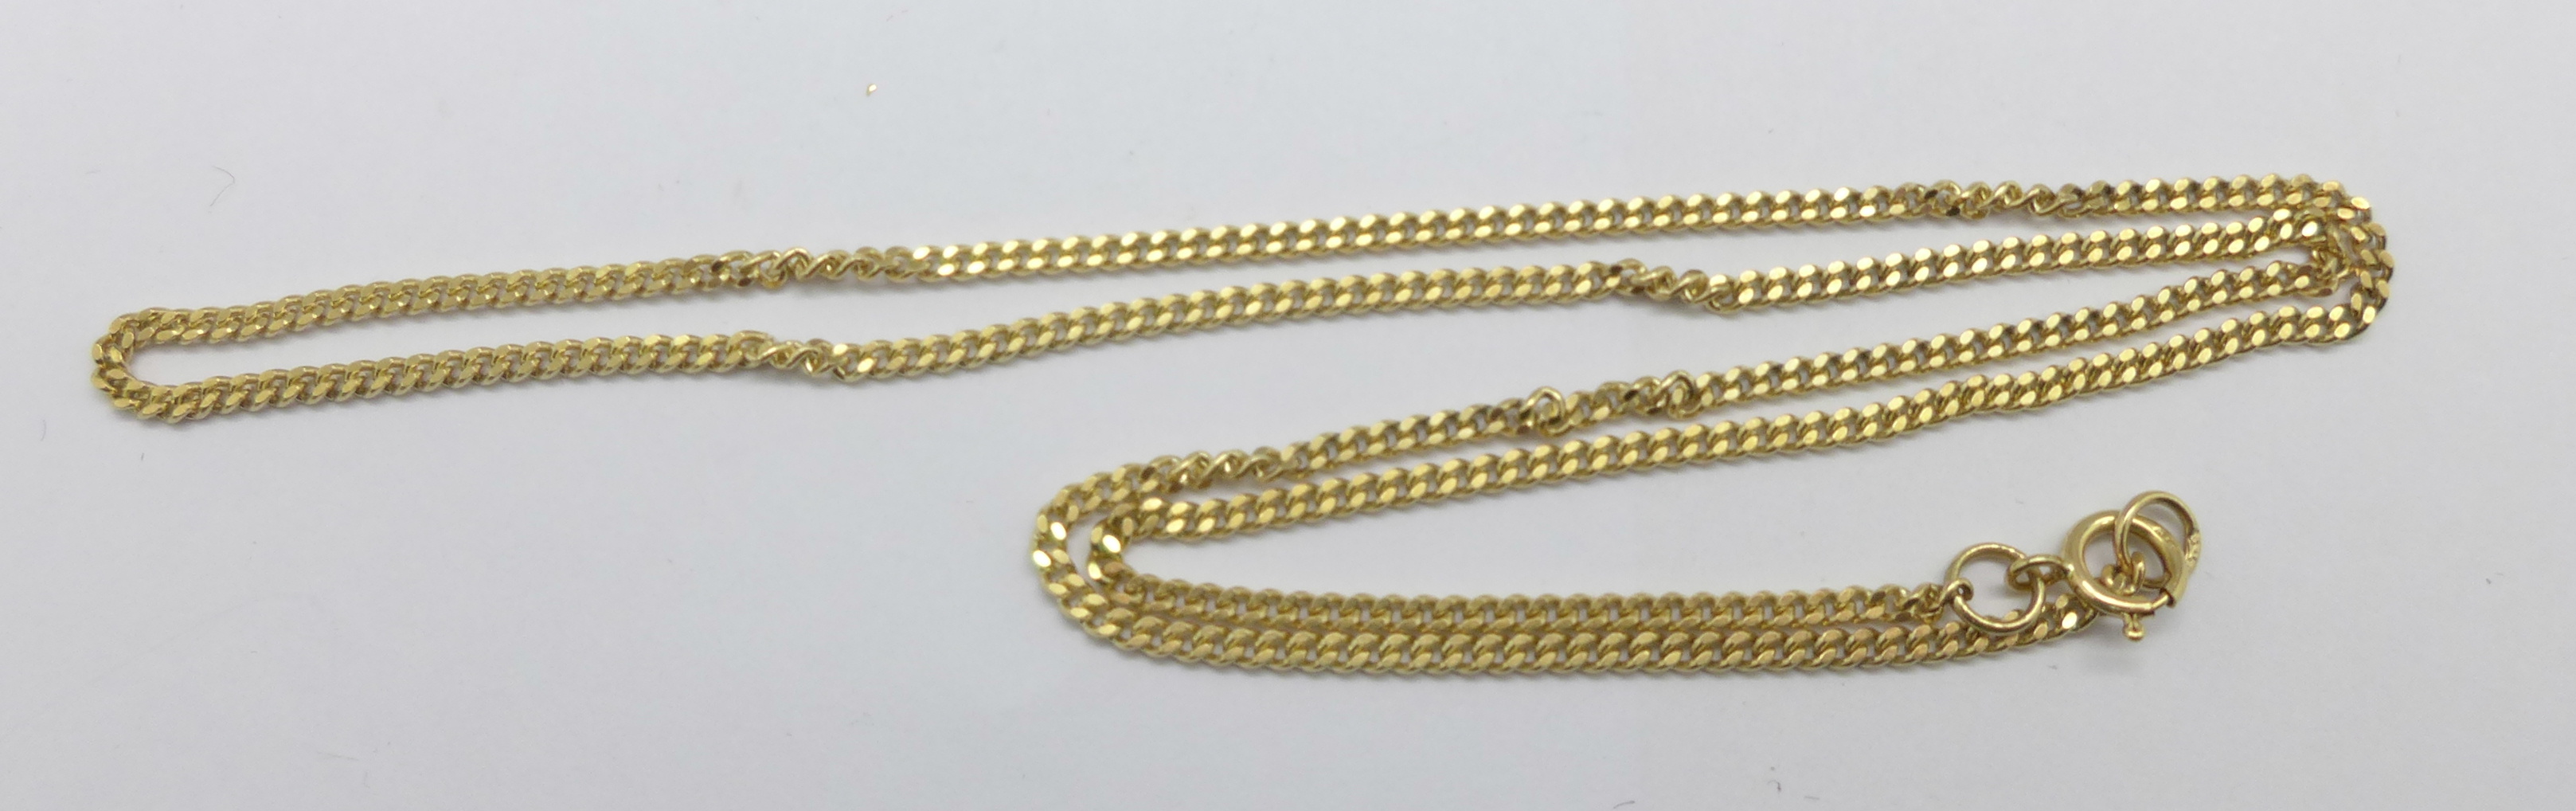 A 9ct gold chain, 3g, 40cm